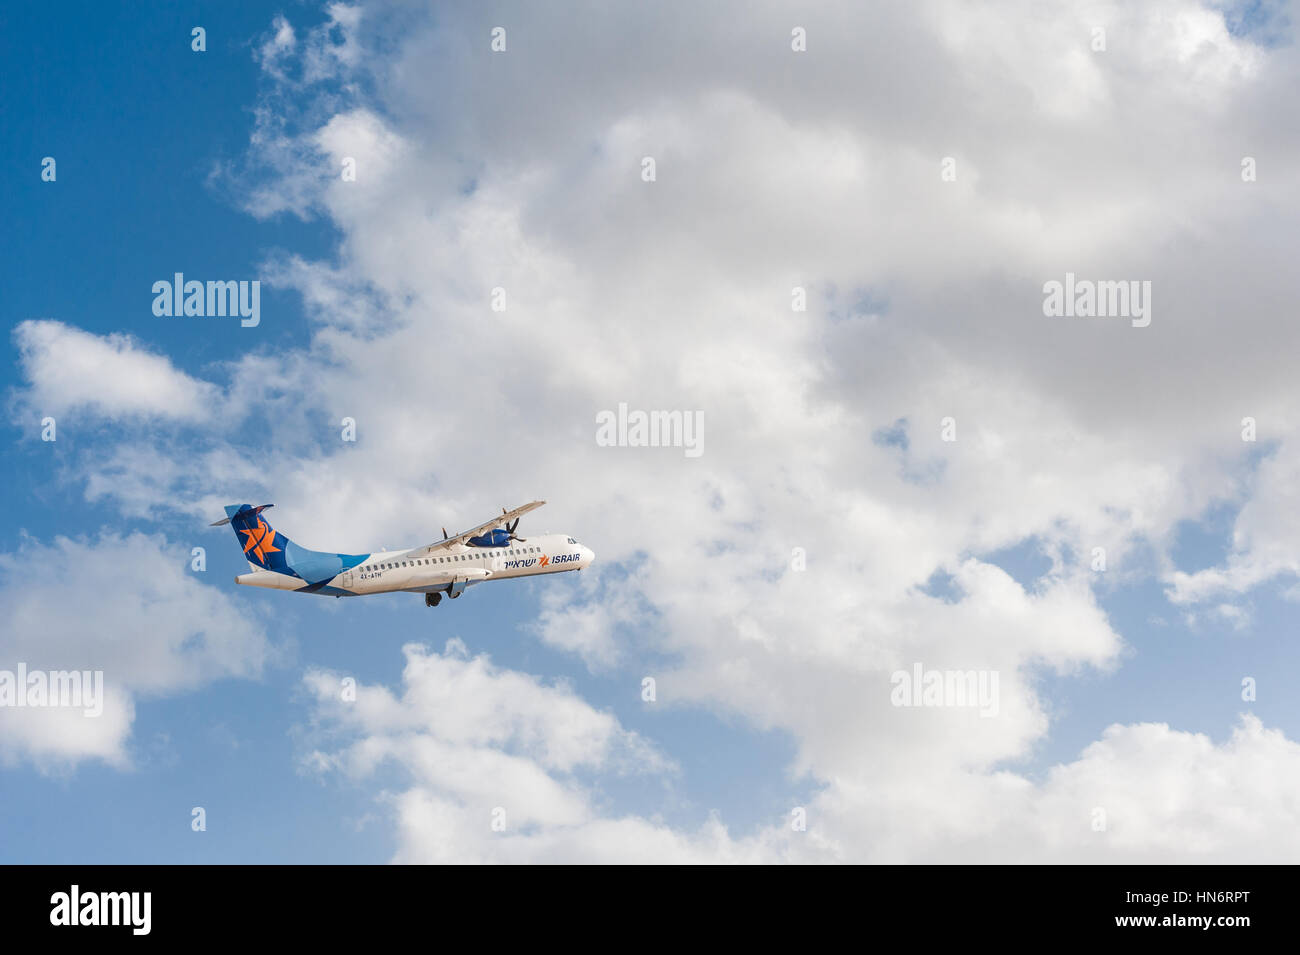 Israel, Tel Aviv-Yafo, Israir flight taking off Stock Photo